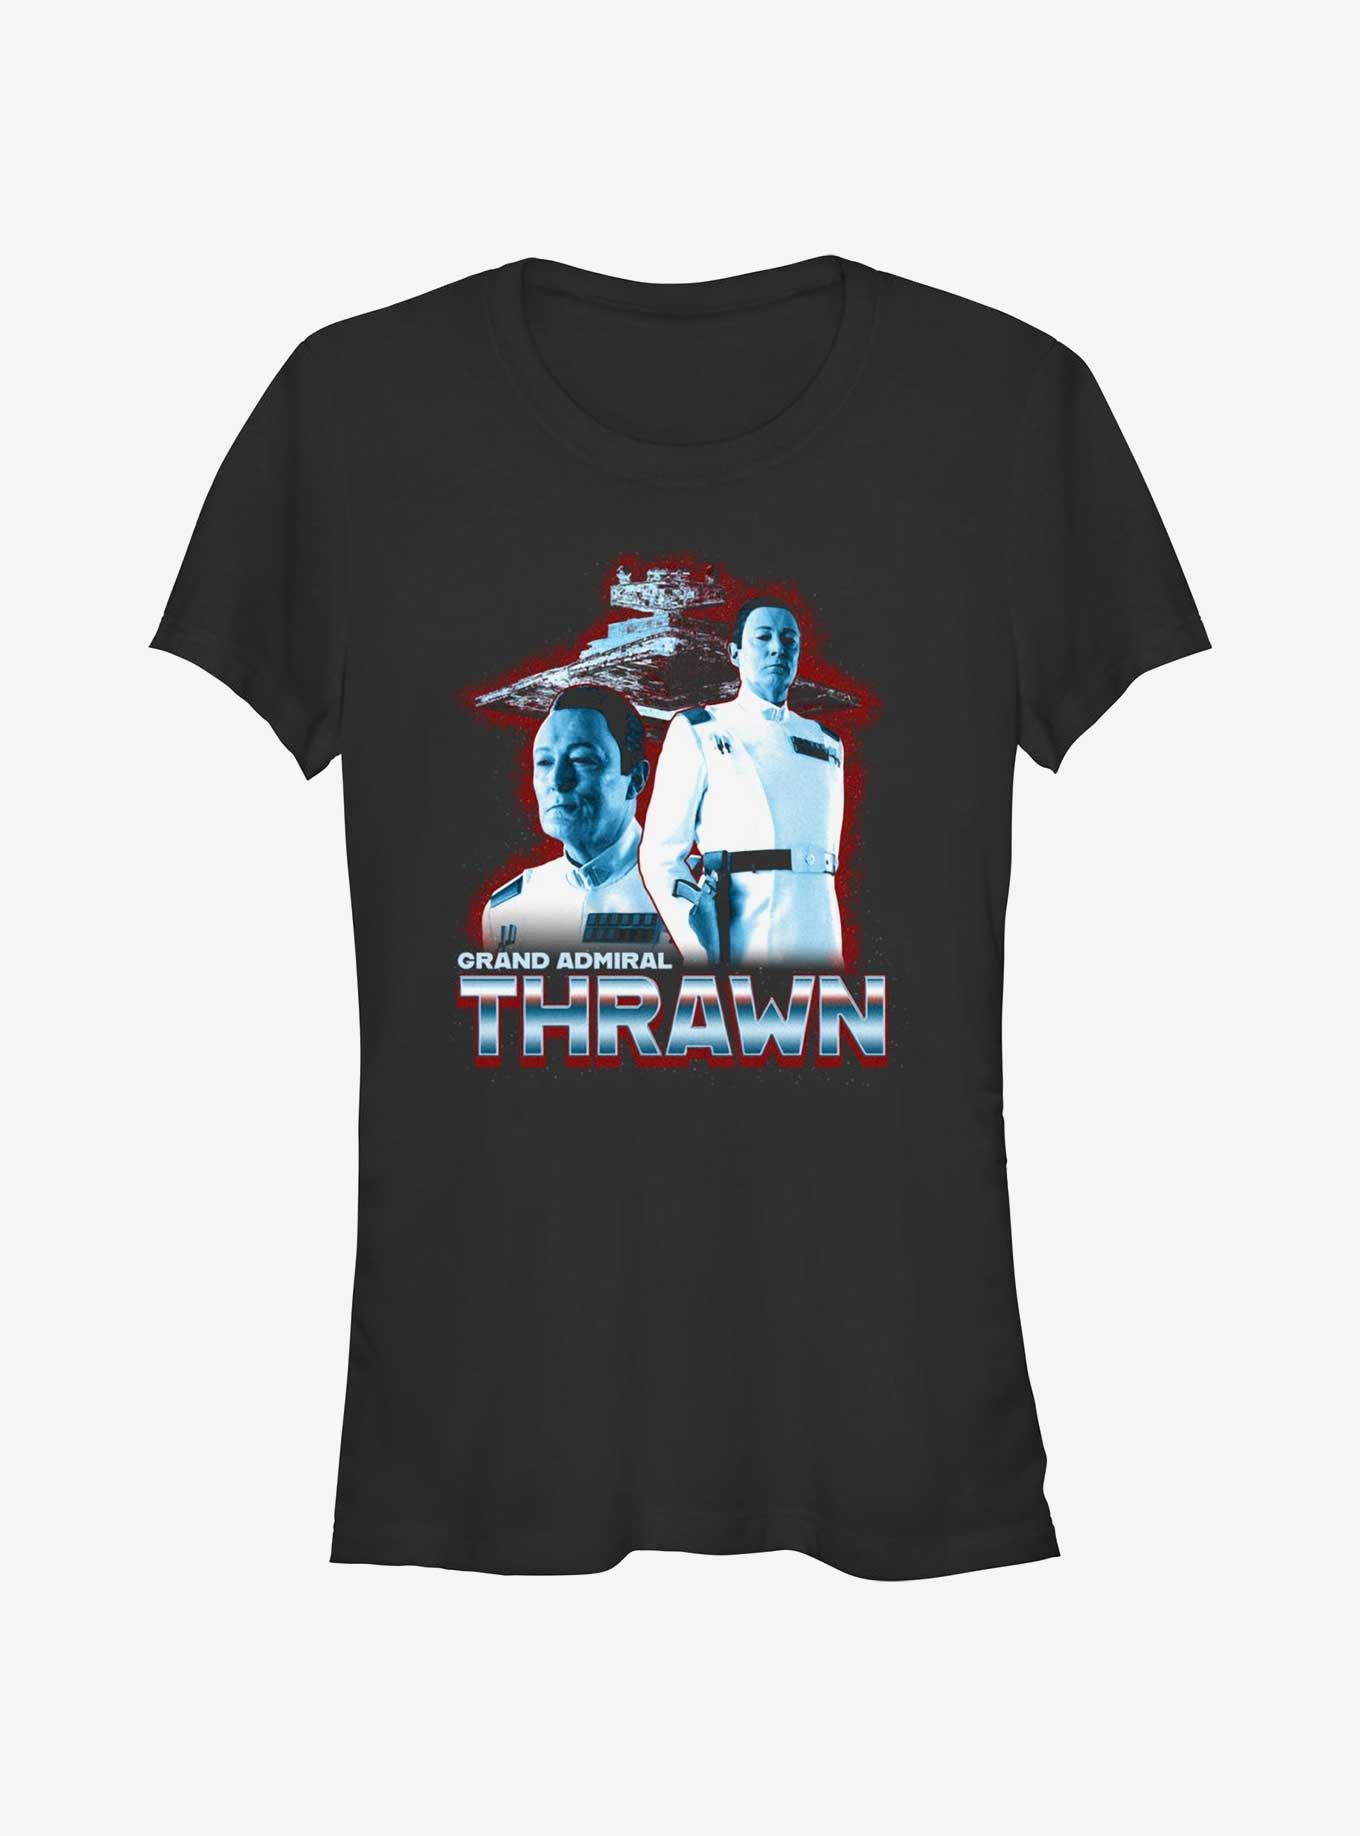 Star Wars Ahsoka Grand Admiral Thrawn Girls T-Shirt Hot Topic Web Exclusive